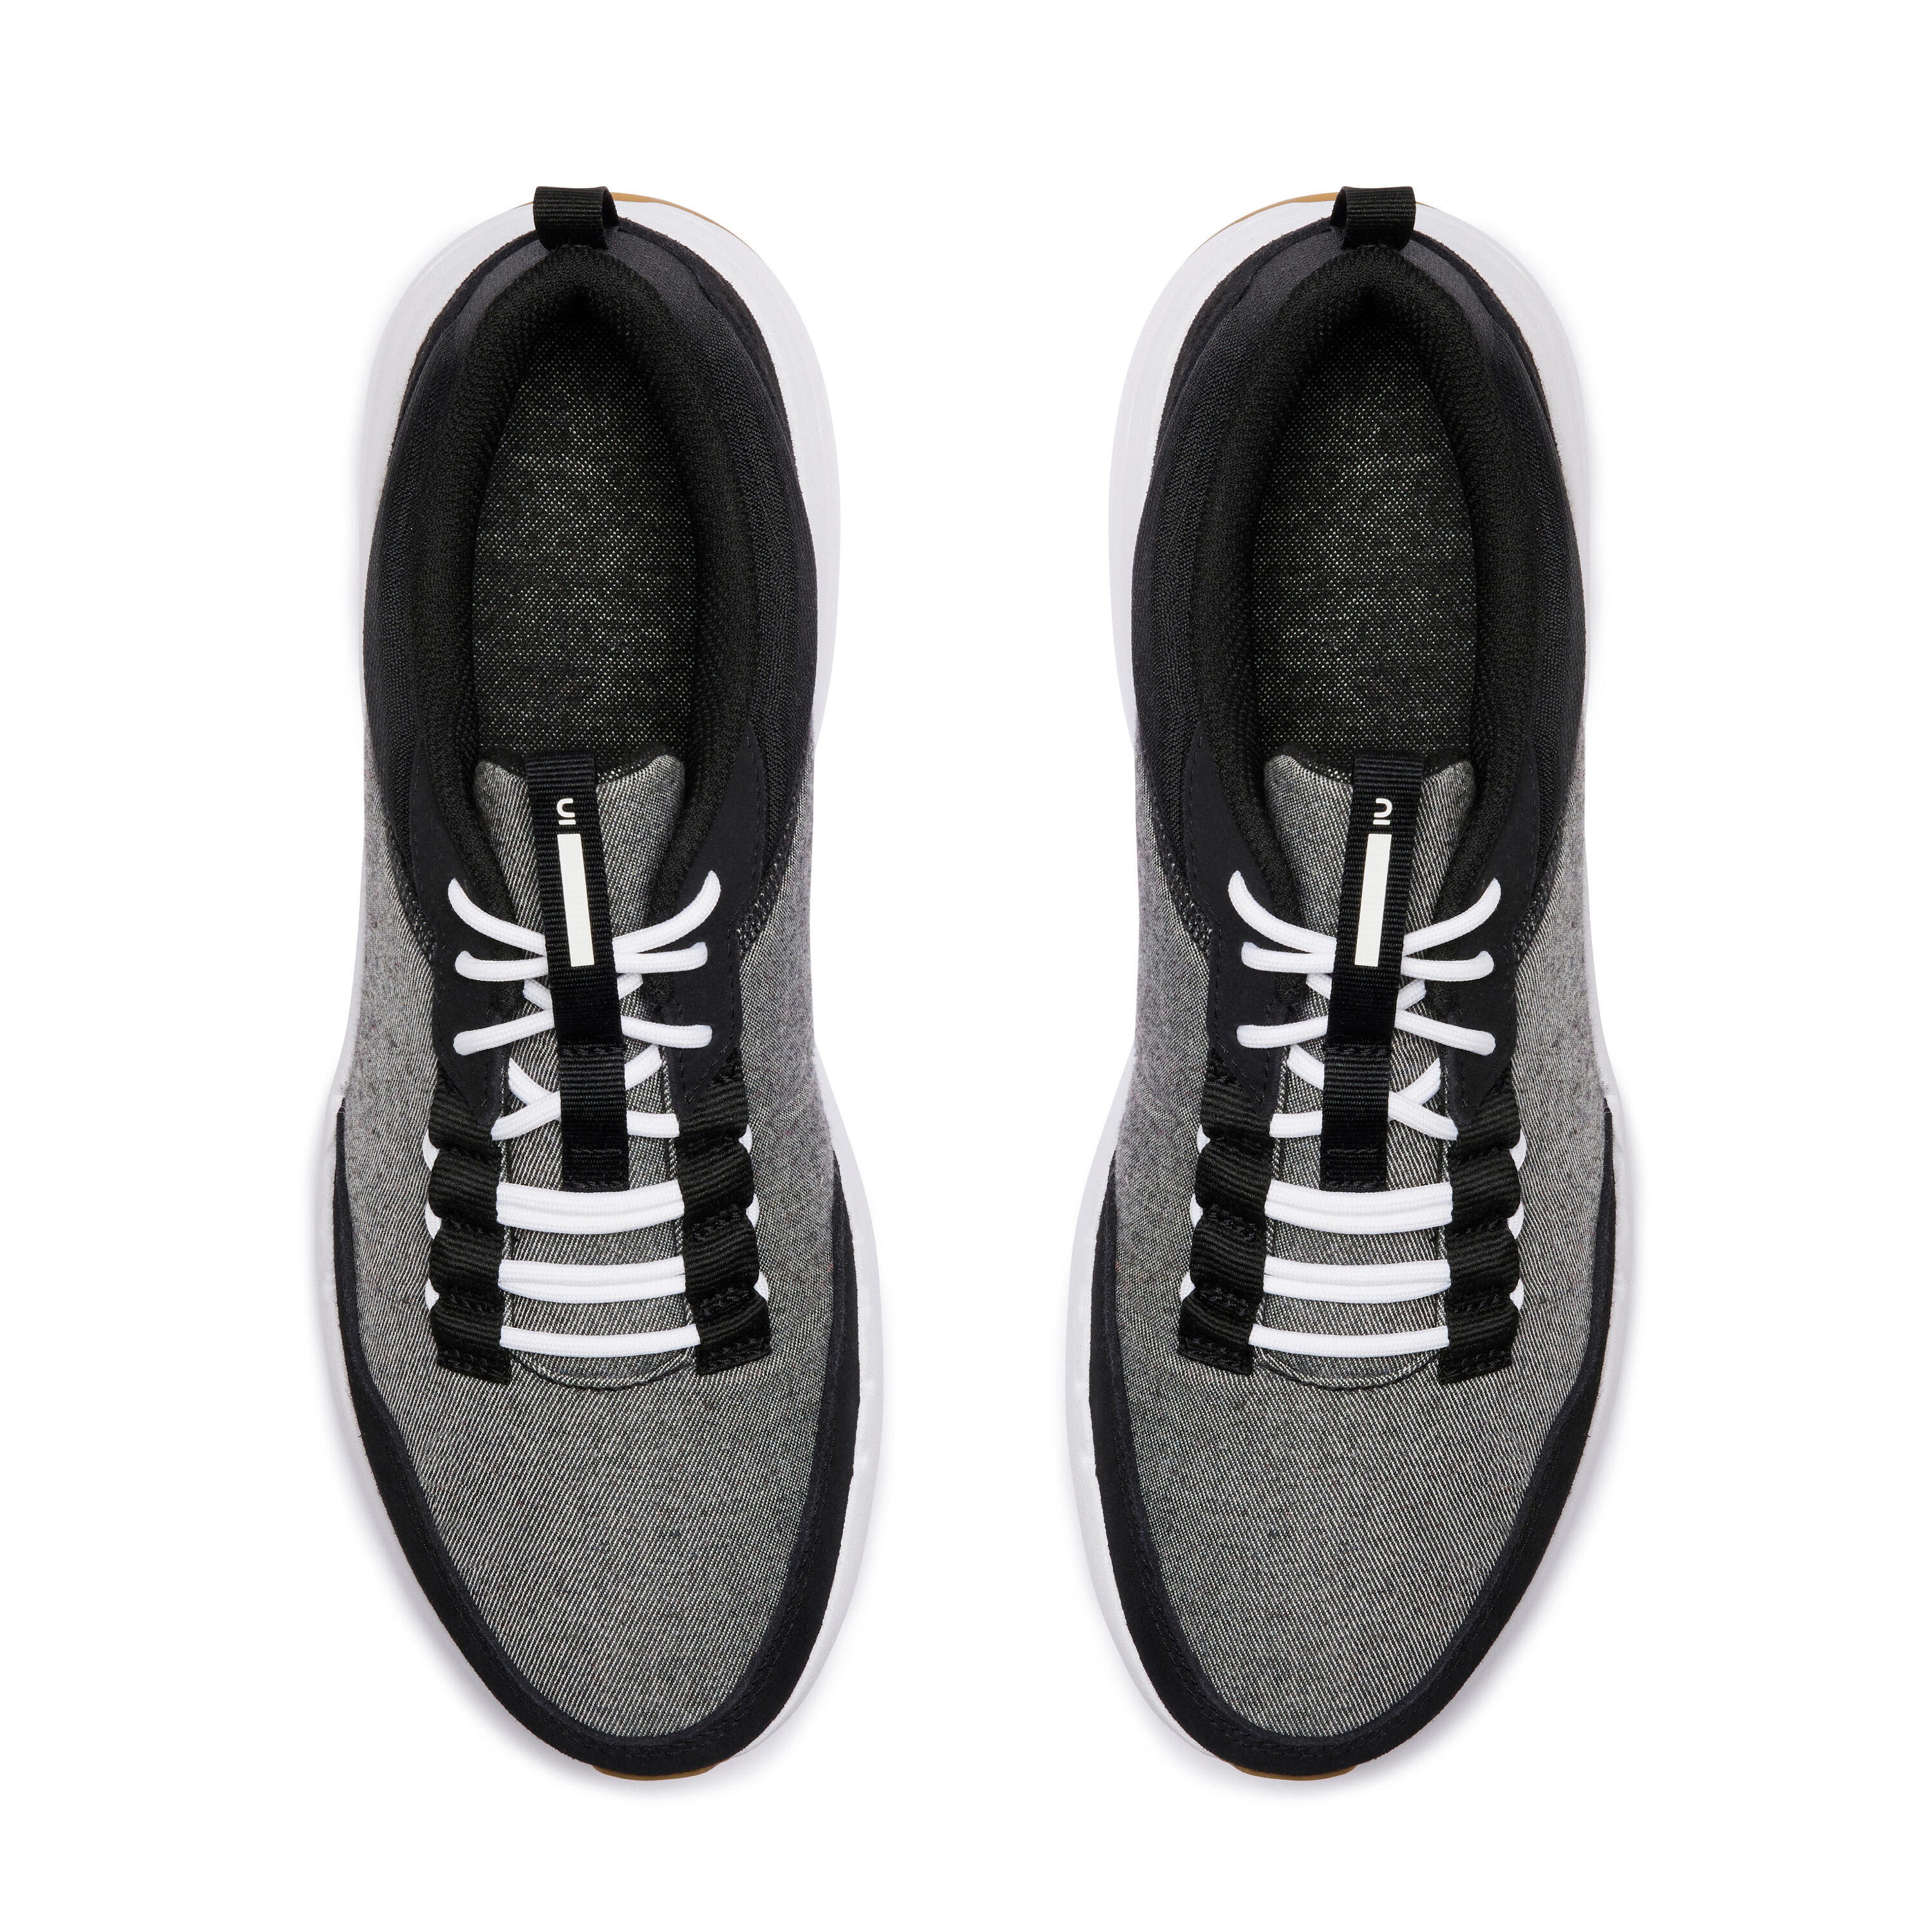 Walk Active Men's Urban Walking Shoes - Black Grey 6/8